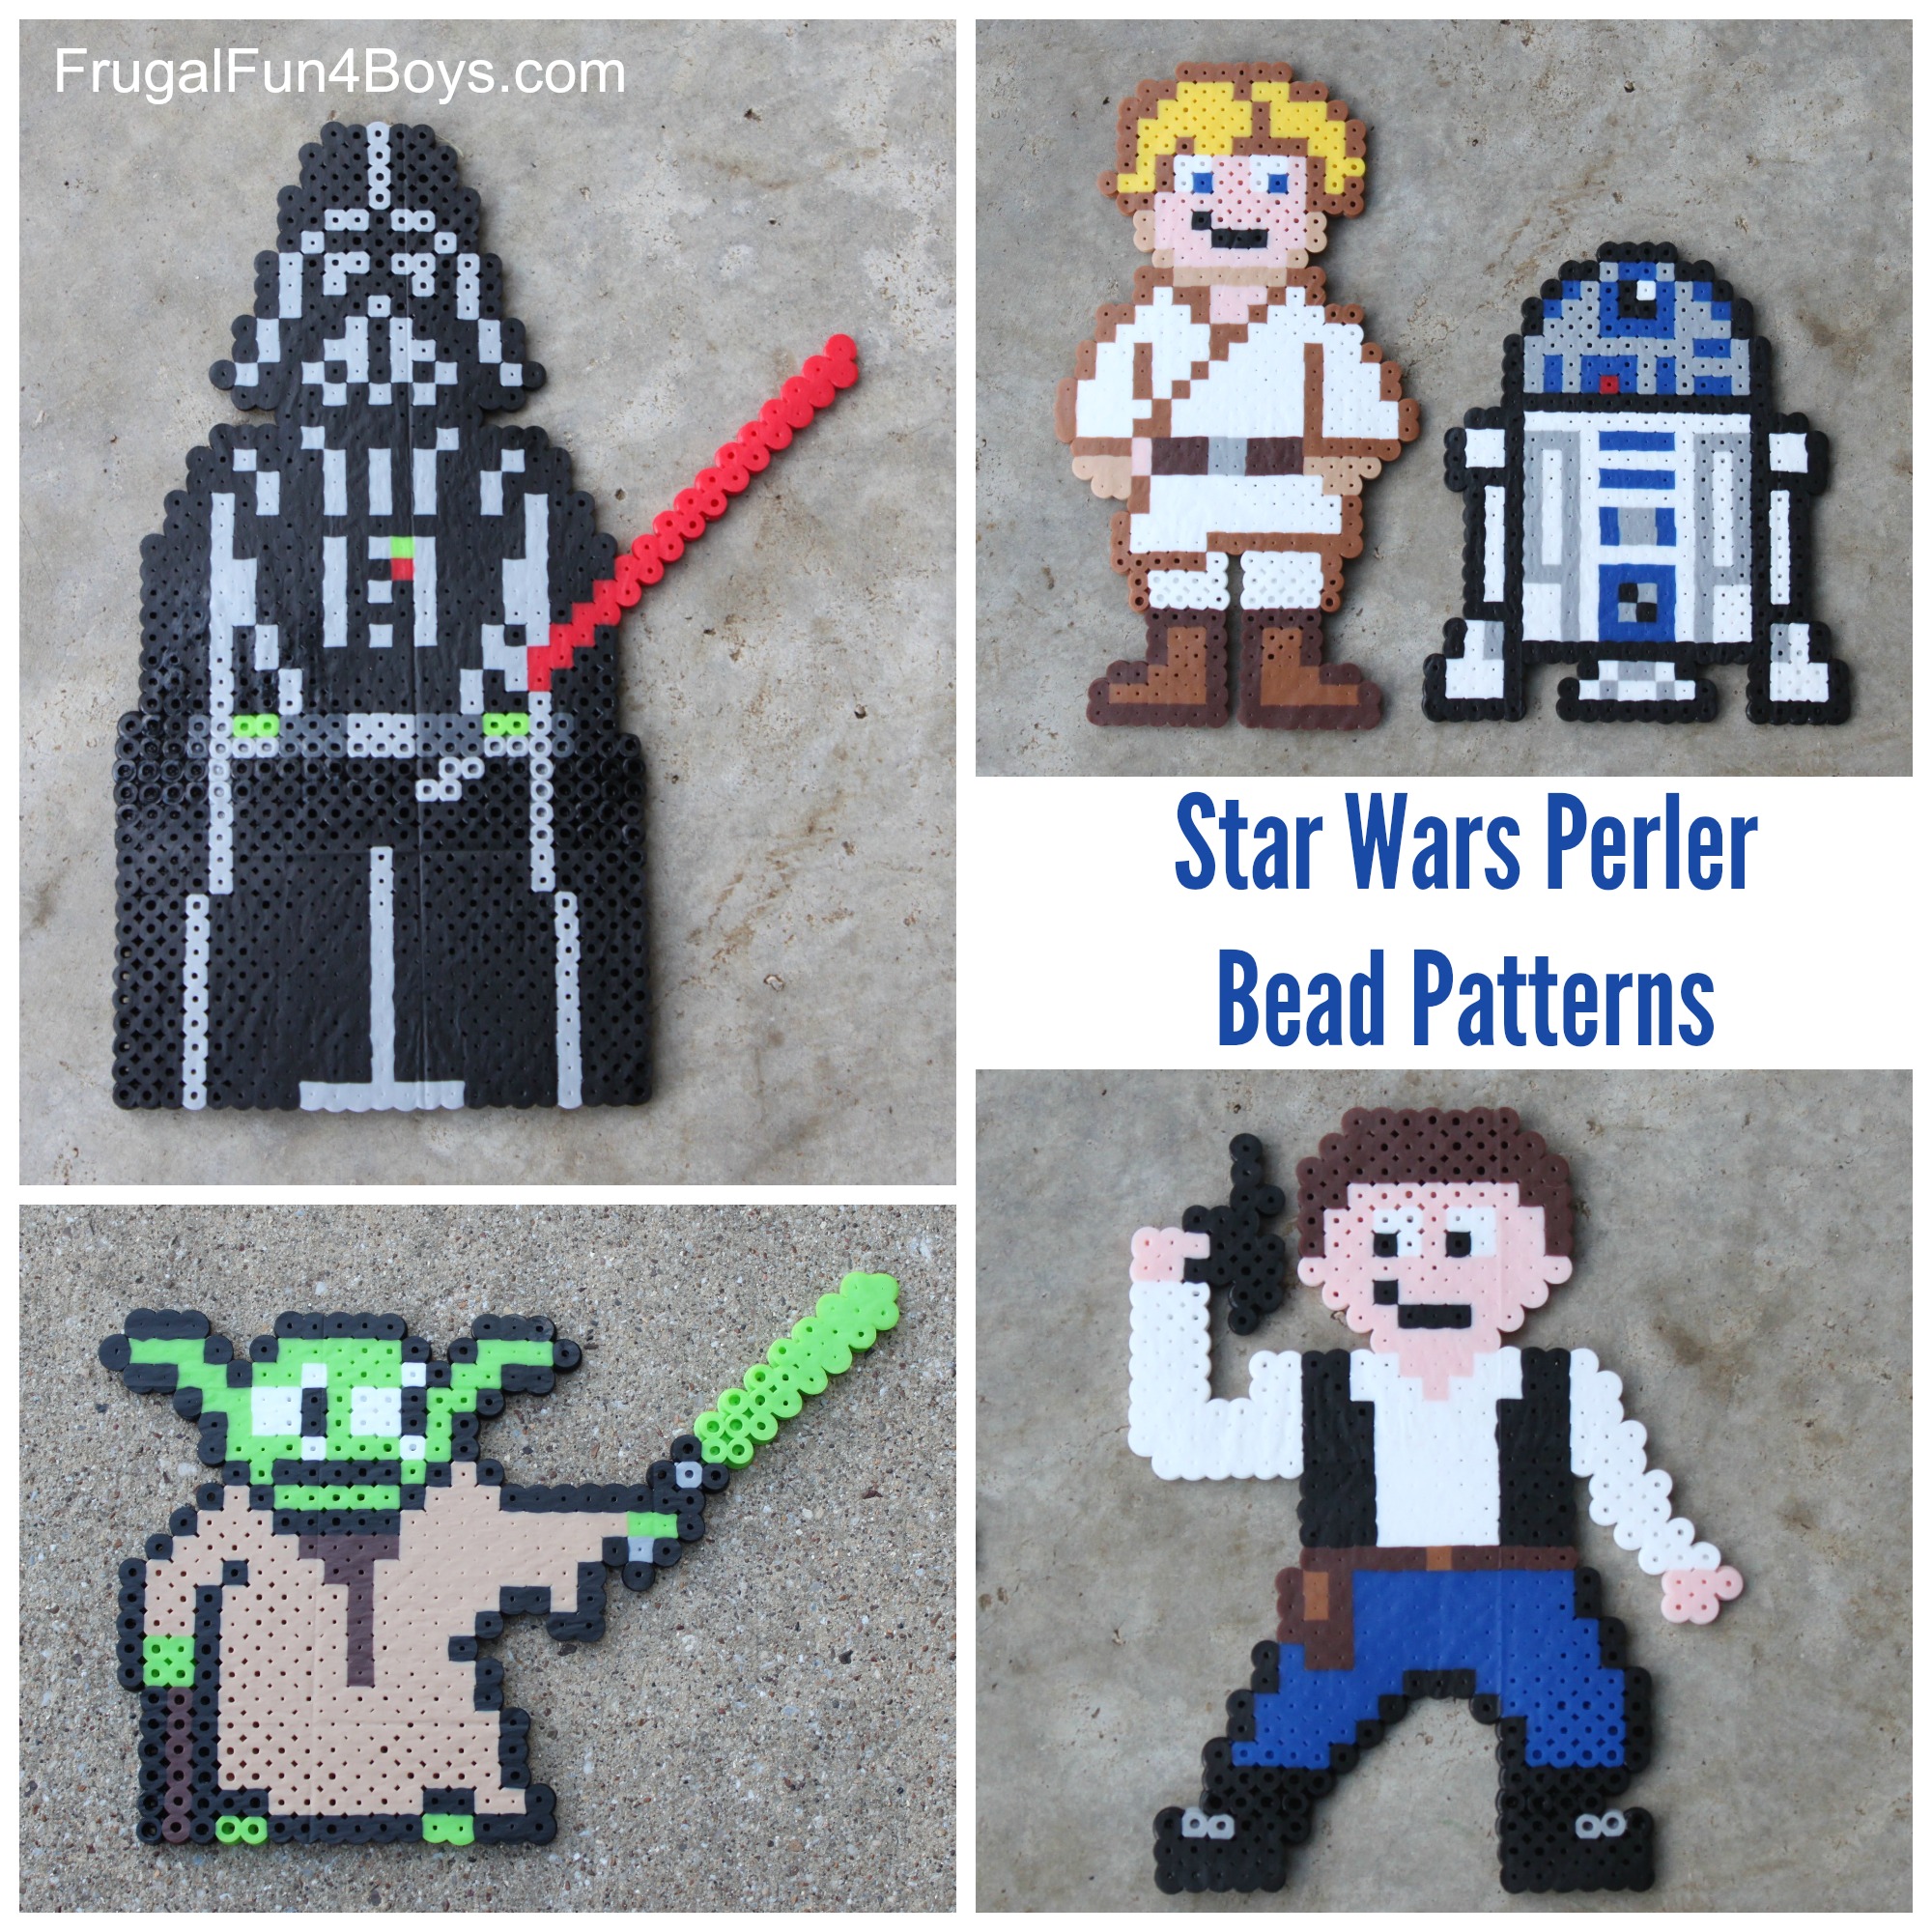 Star Wars Perler Bead Patterns